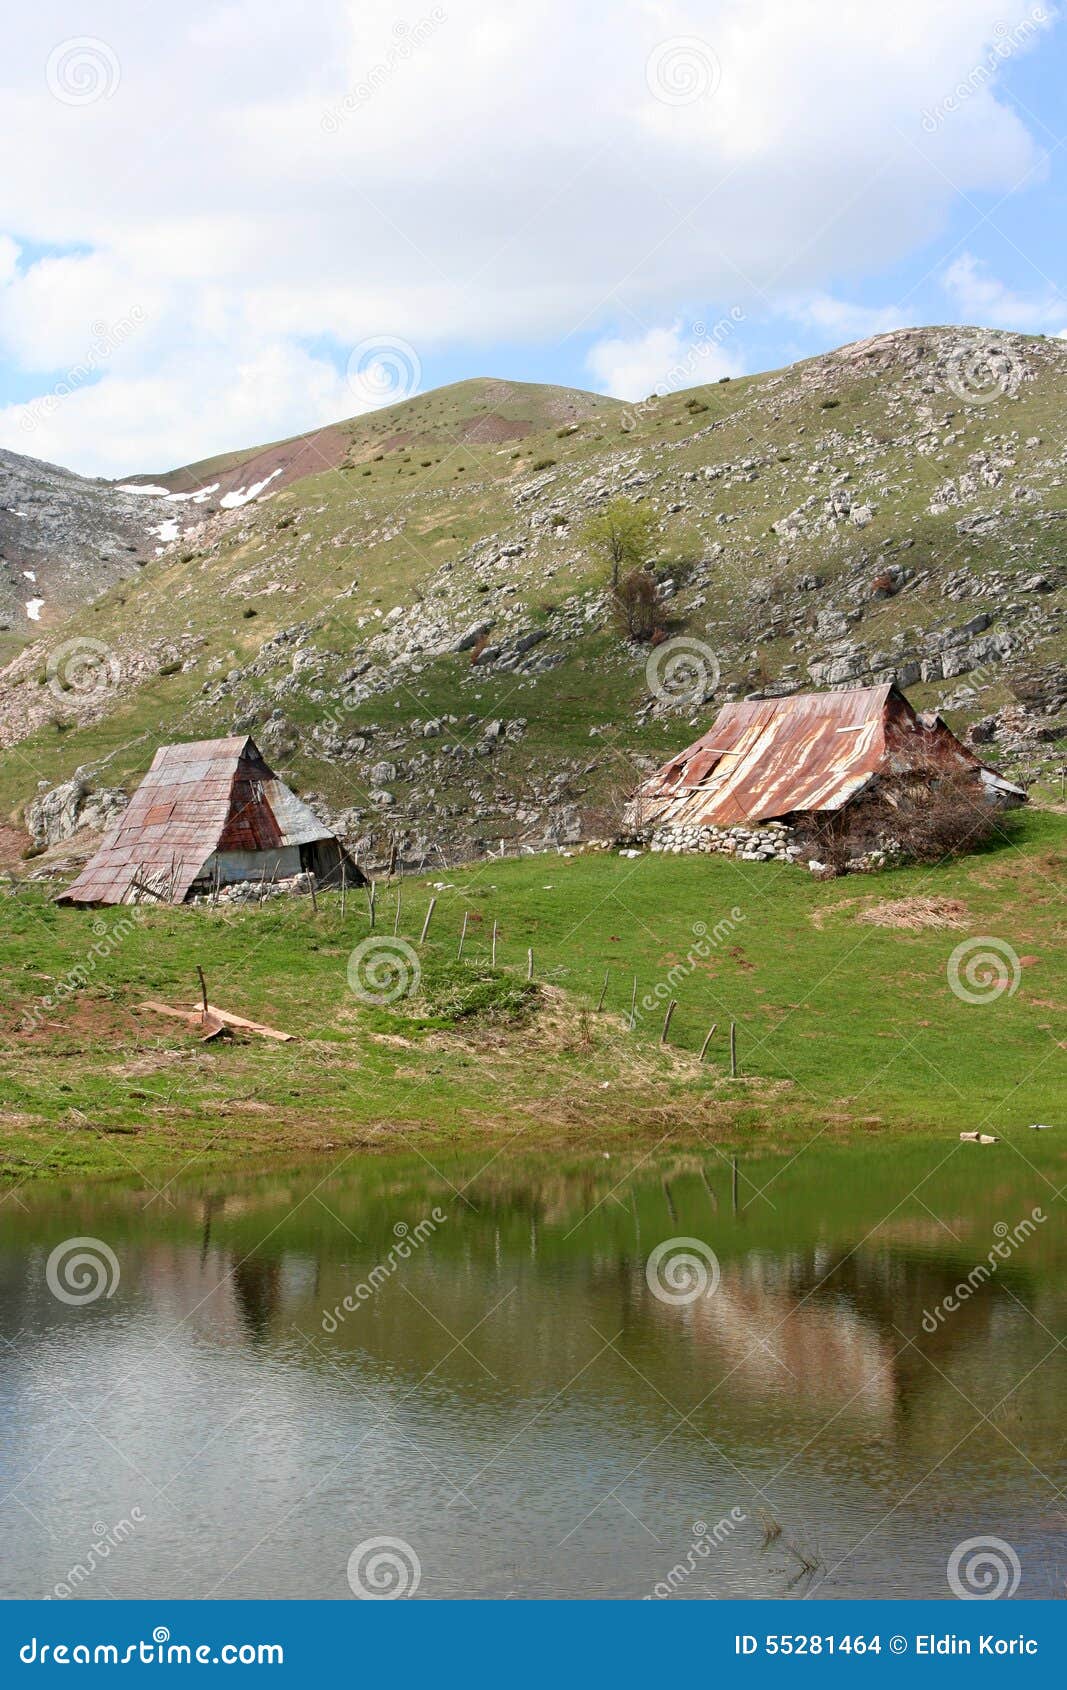 pastoral village in mountains